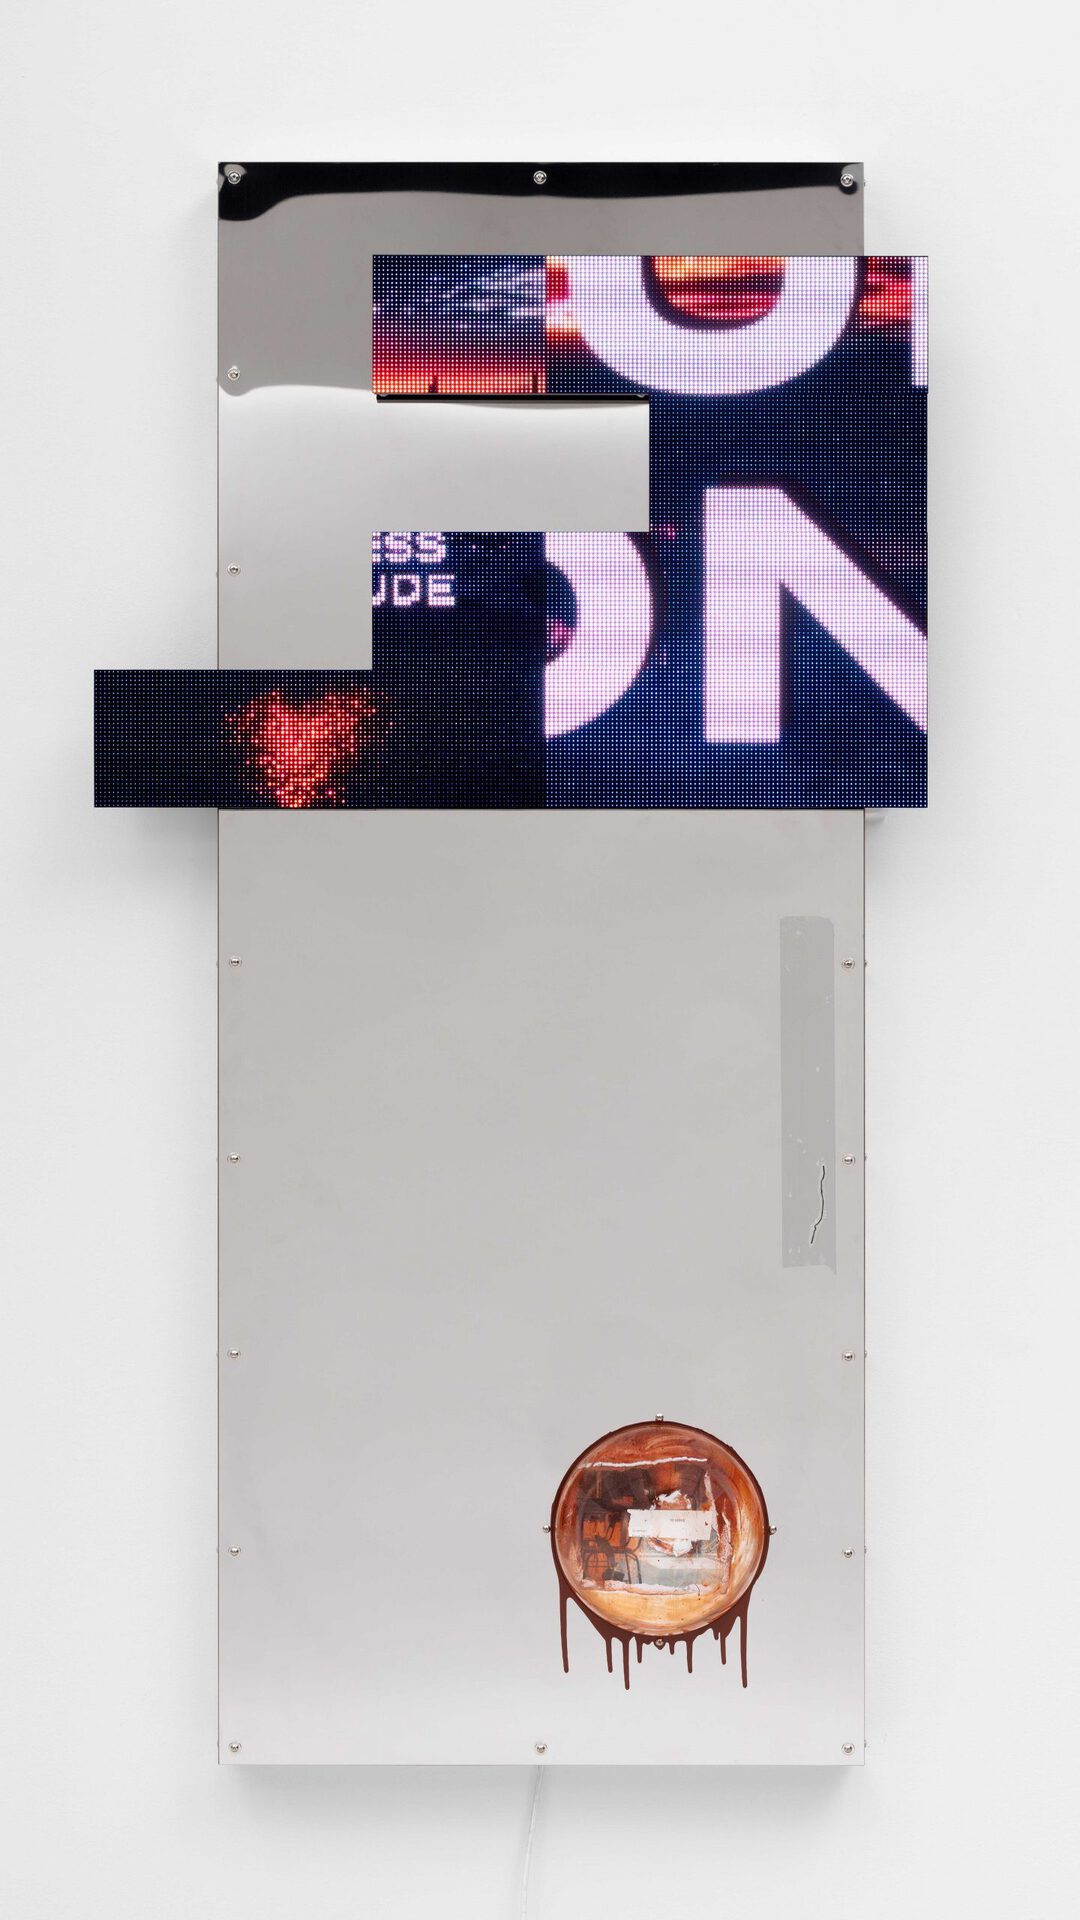 Mathis Altmann, Corpus Oeconomicus, 2021, LED matrix screen, video loop 2.15 min., stainless steel mirror, acrylic glass, photo print, adhesive tape, 52 x 77 x 13 cm